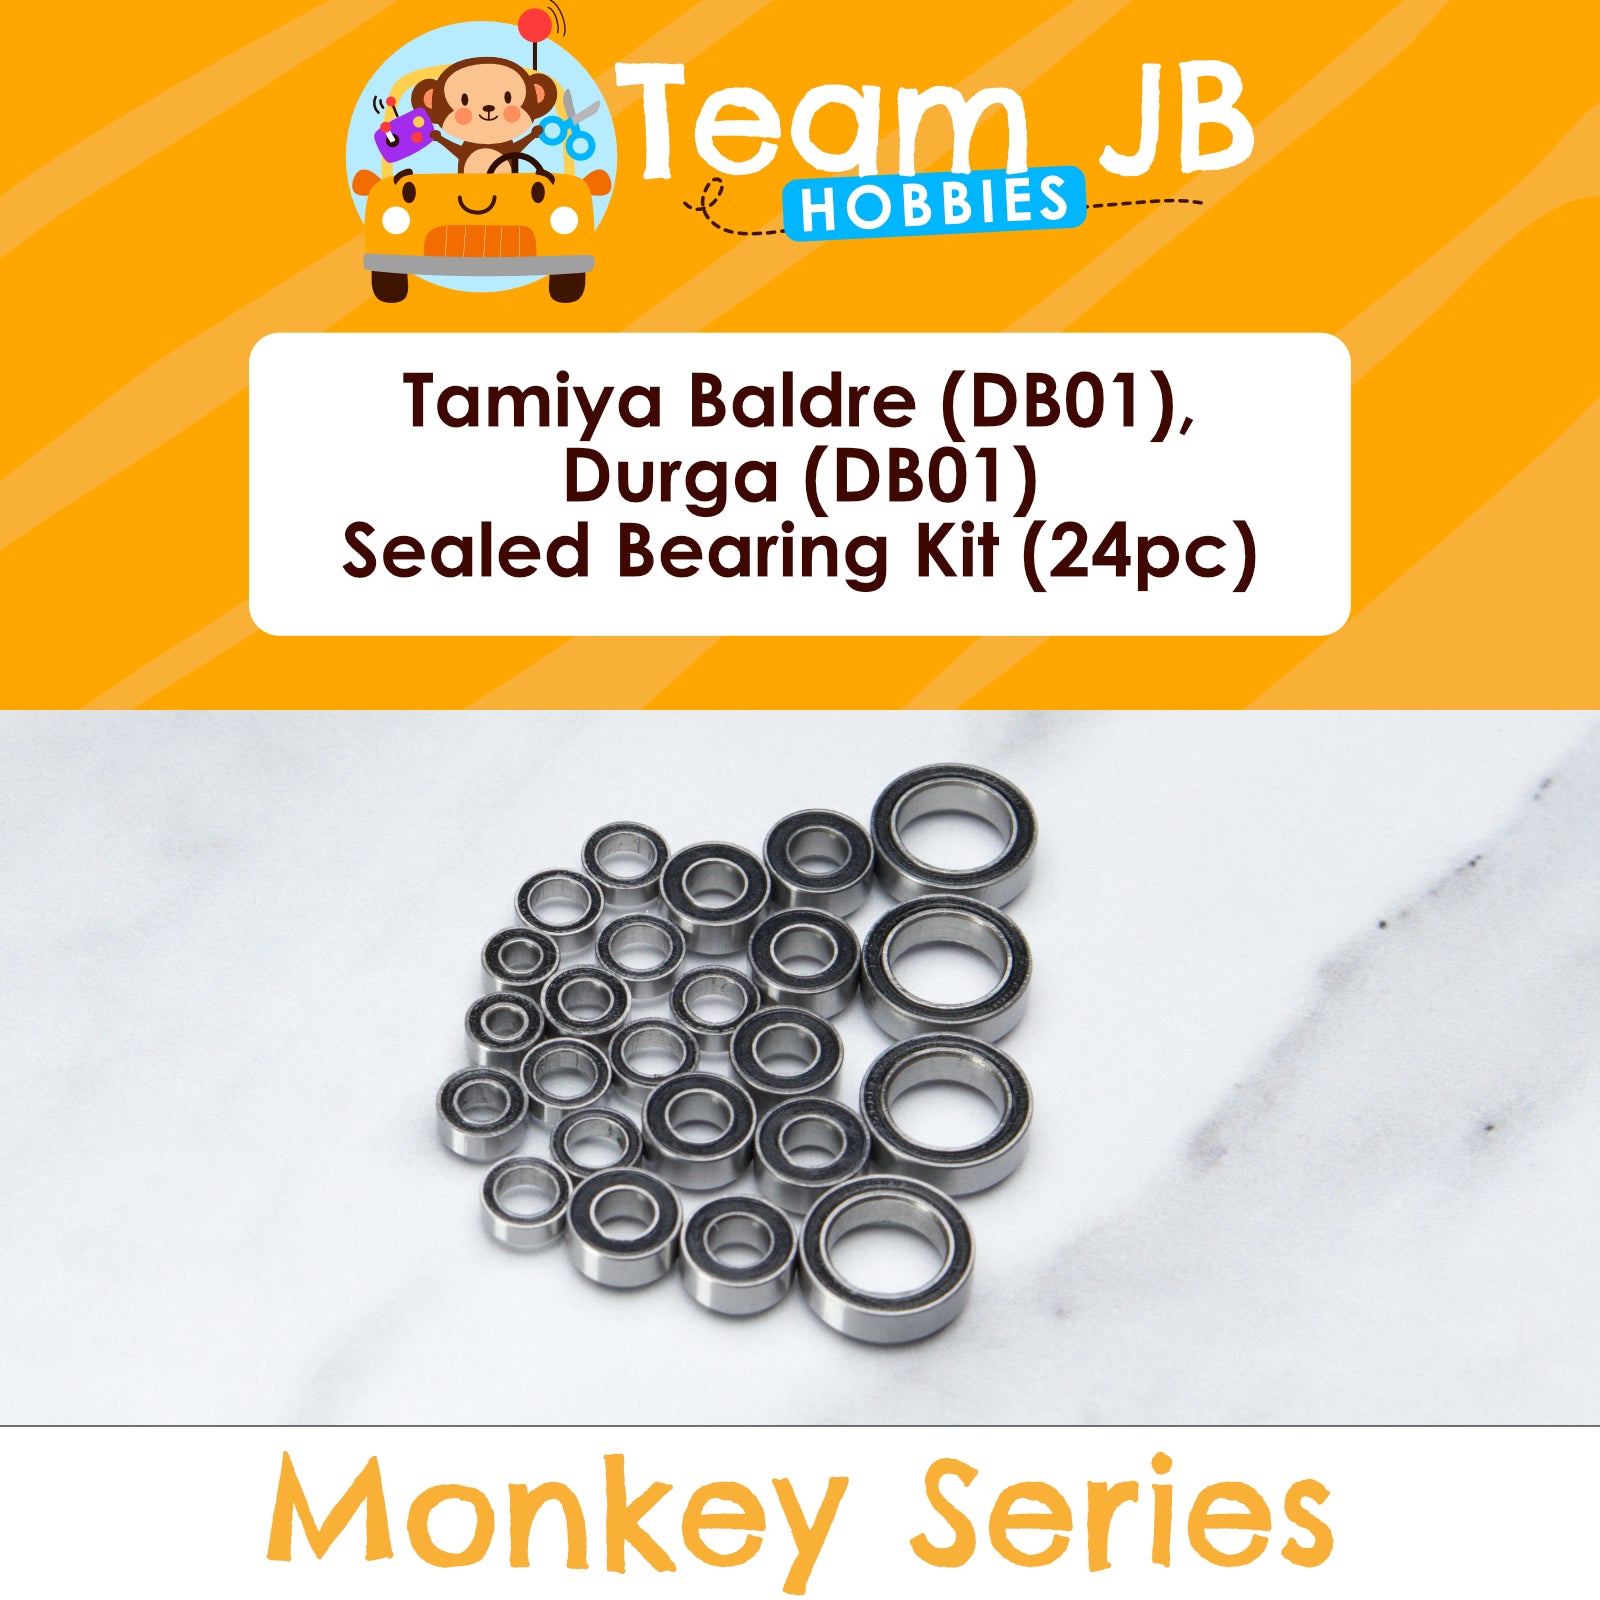 Tamiya Baldre (DB01), Durga (DB01) - Sealed Bearing Kit